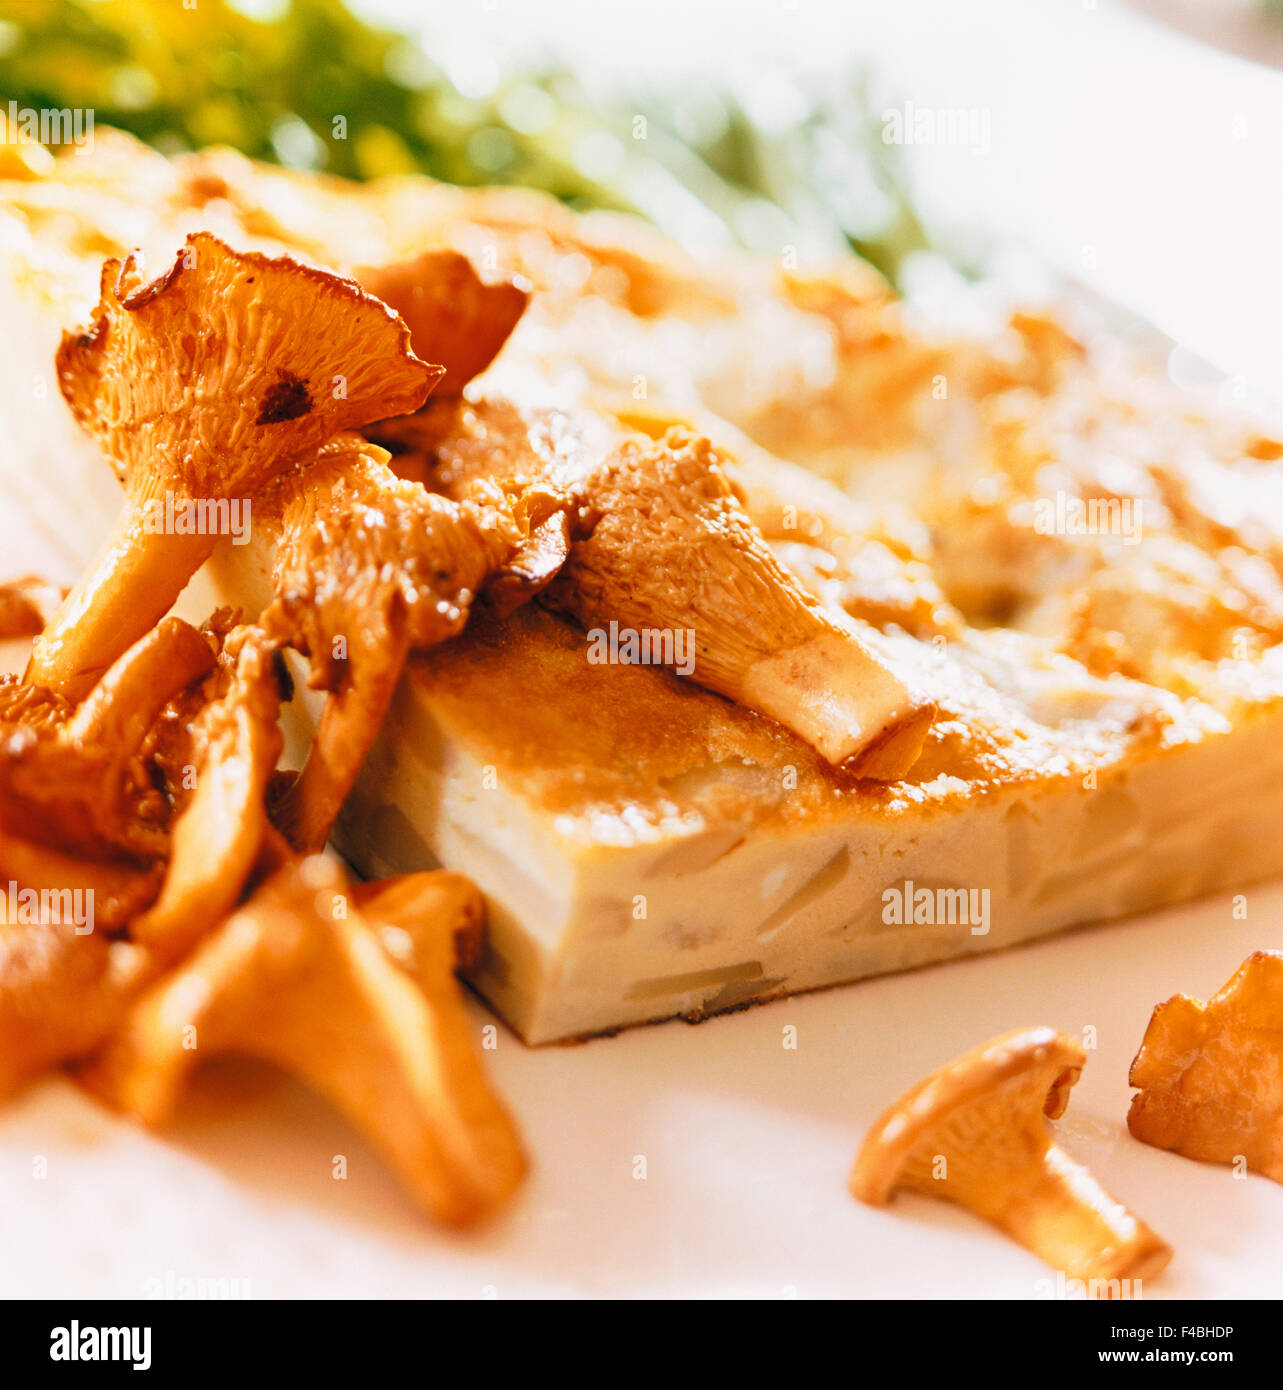 https://c8.alamy.com/comp/F4BHDP/catalogue-2-chanterelle-close-up-color-image-detail-dish-food-food-F4BHDP.jpg